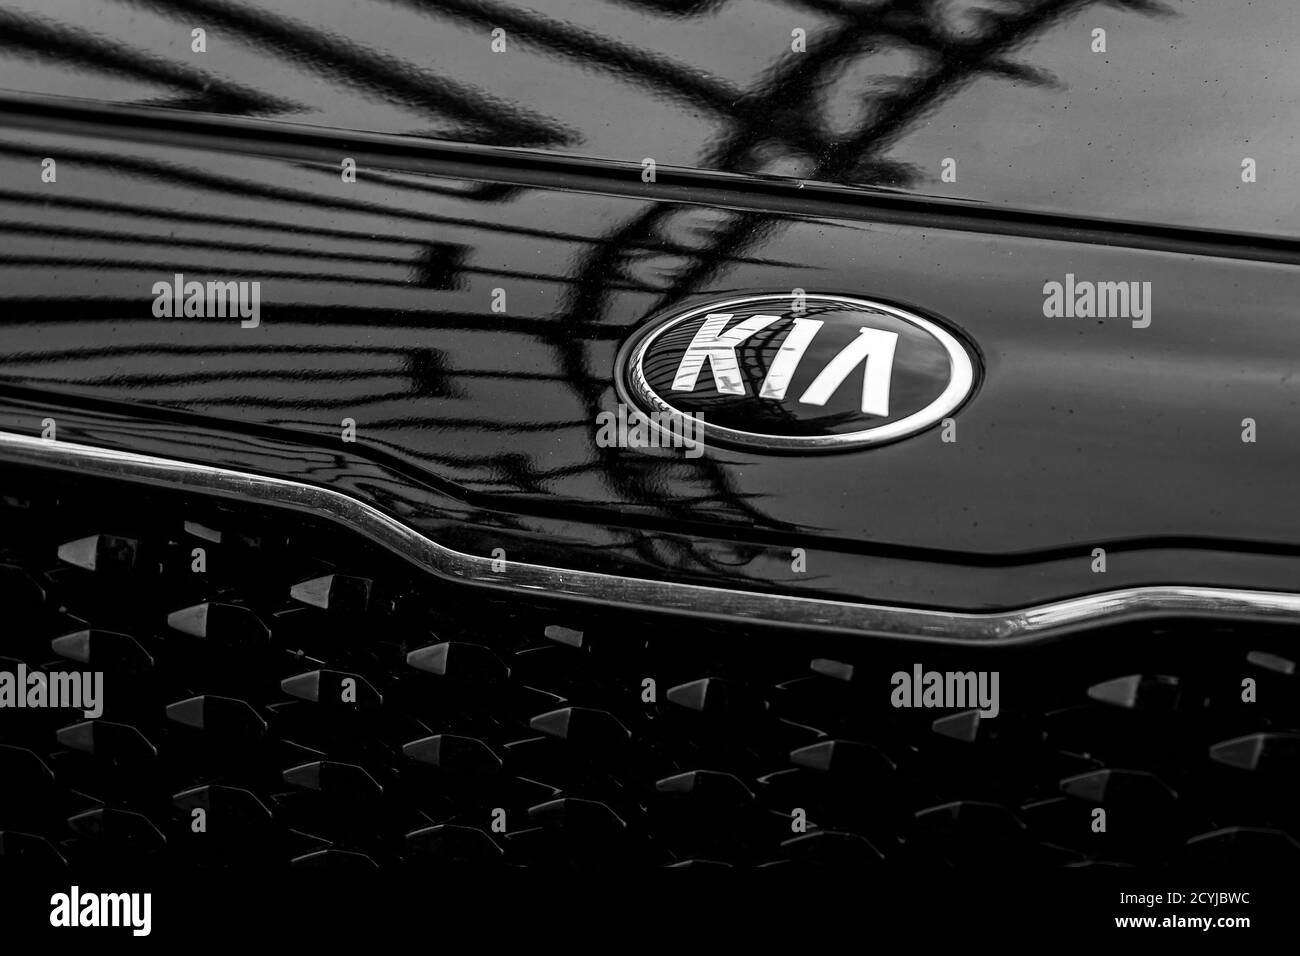 Russia, Kaluga - SEPTEMBER 29, 2020: Chromed Kia Motors logo on a black hood of a new car. Stock Photo